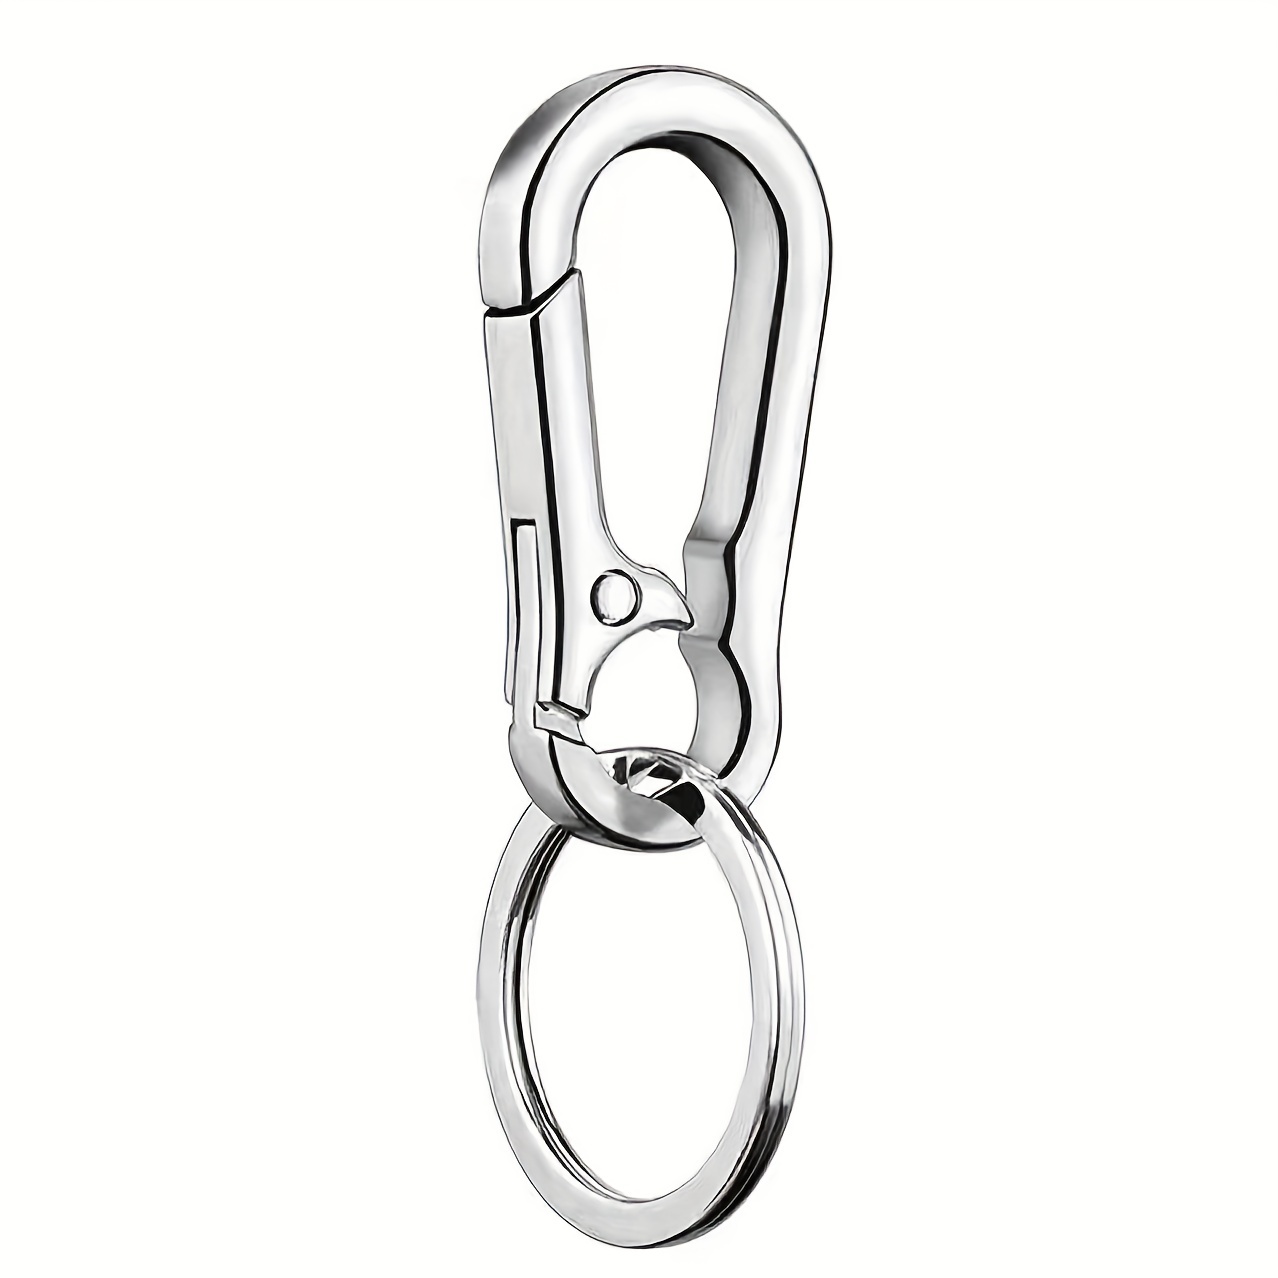 Stainless Steel Car Keyring  Stainless Steel Key Ring - Key Ring